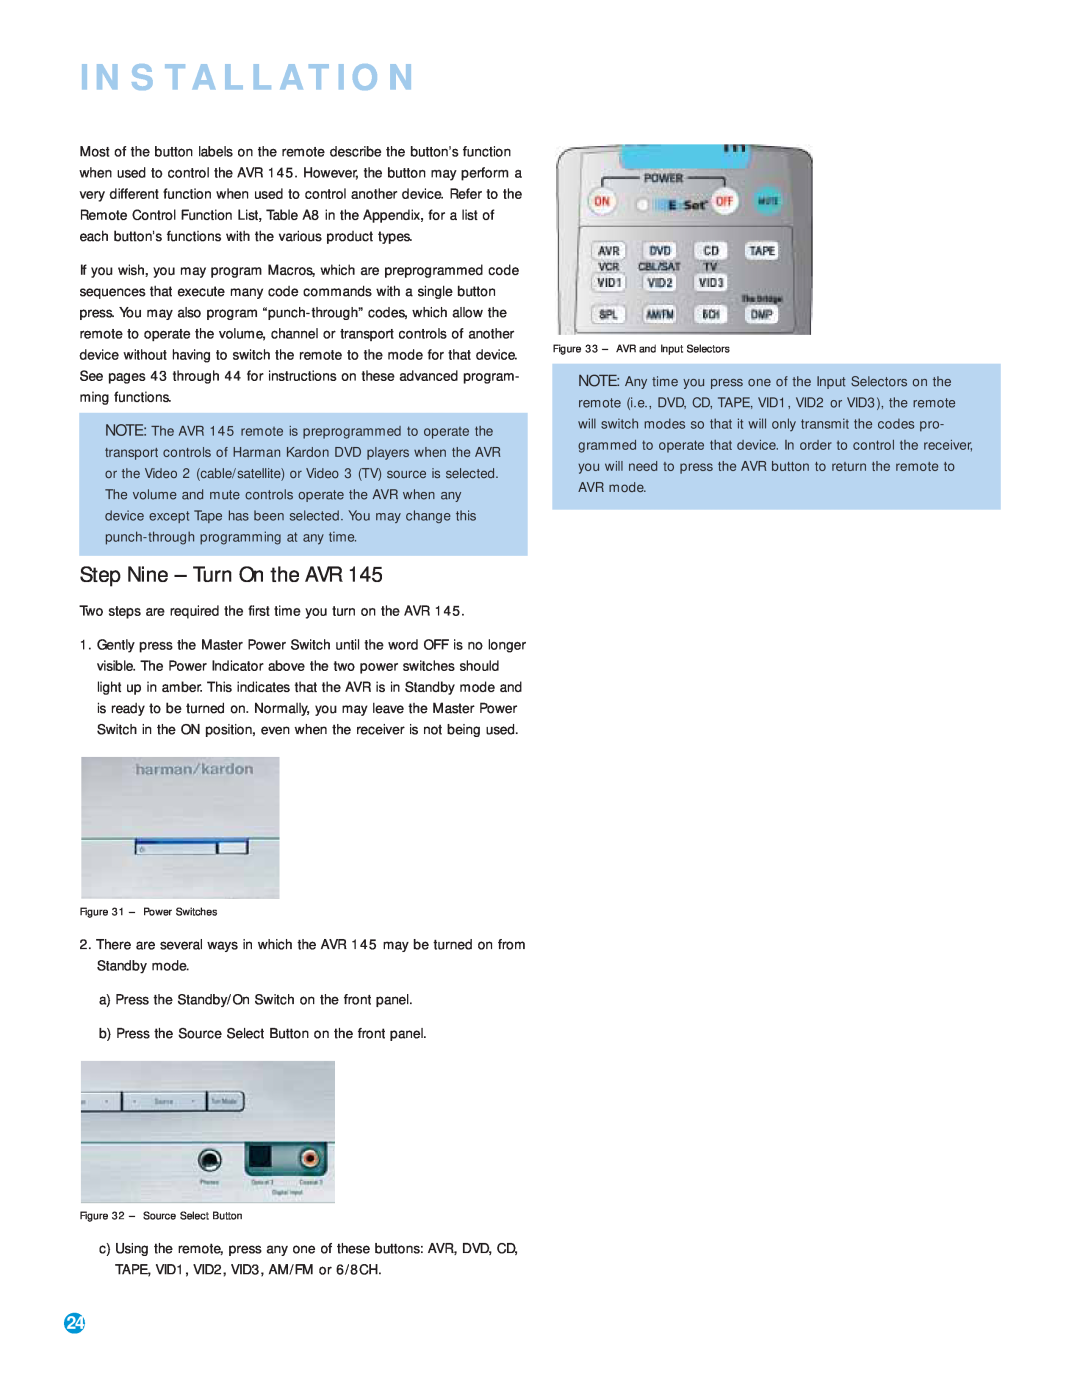 Harman-Kardon AVR 145 Step Nine - Turn On the AVR, Installation, aPress the Standby/On Switch on the front panel 